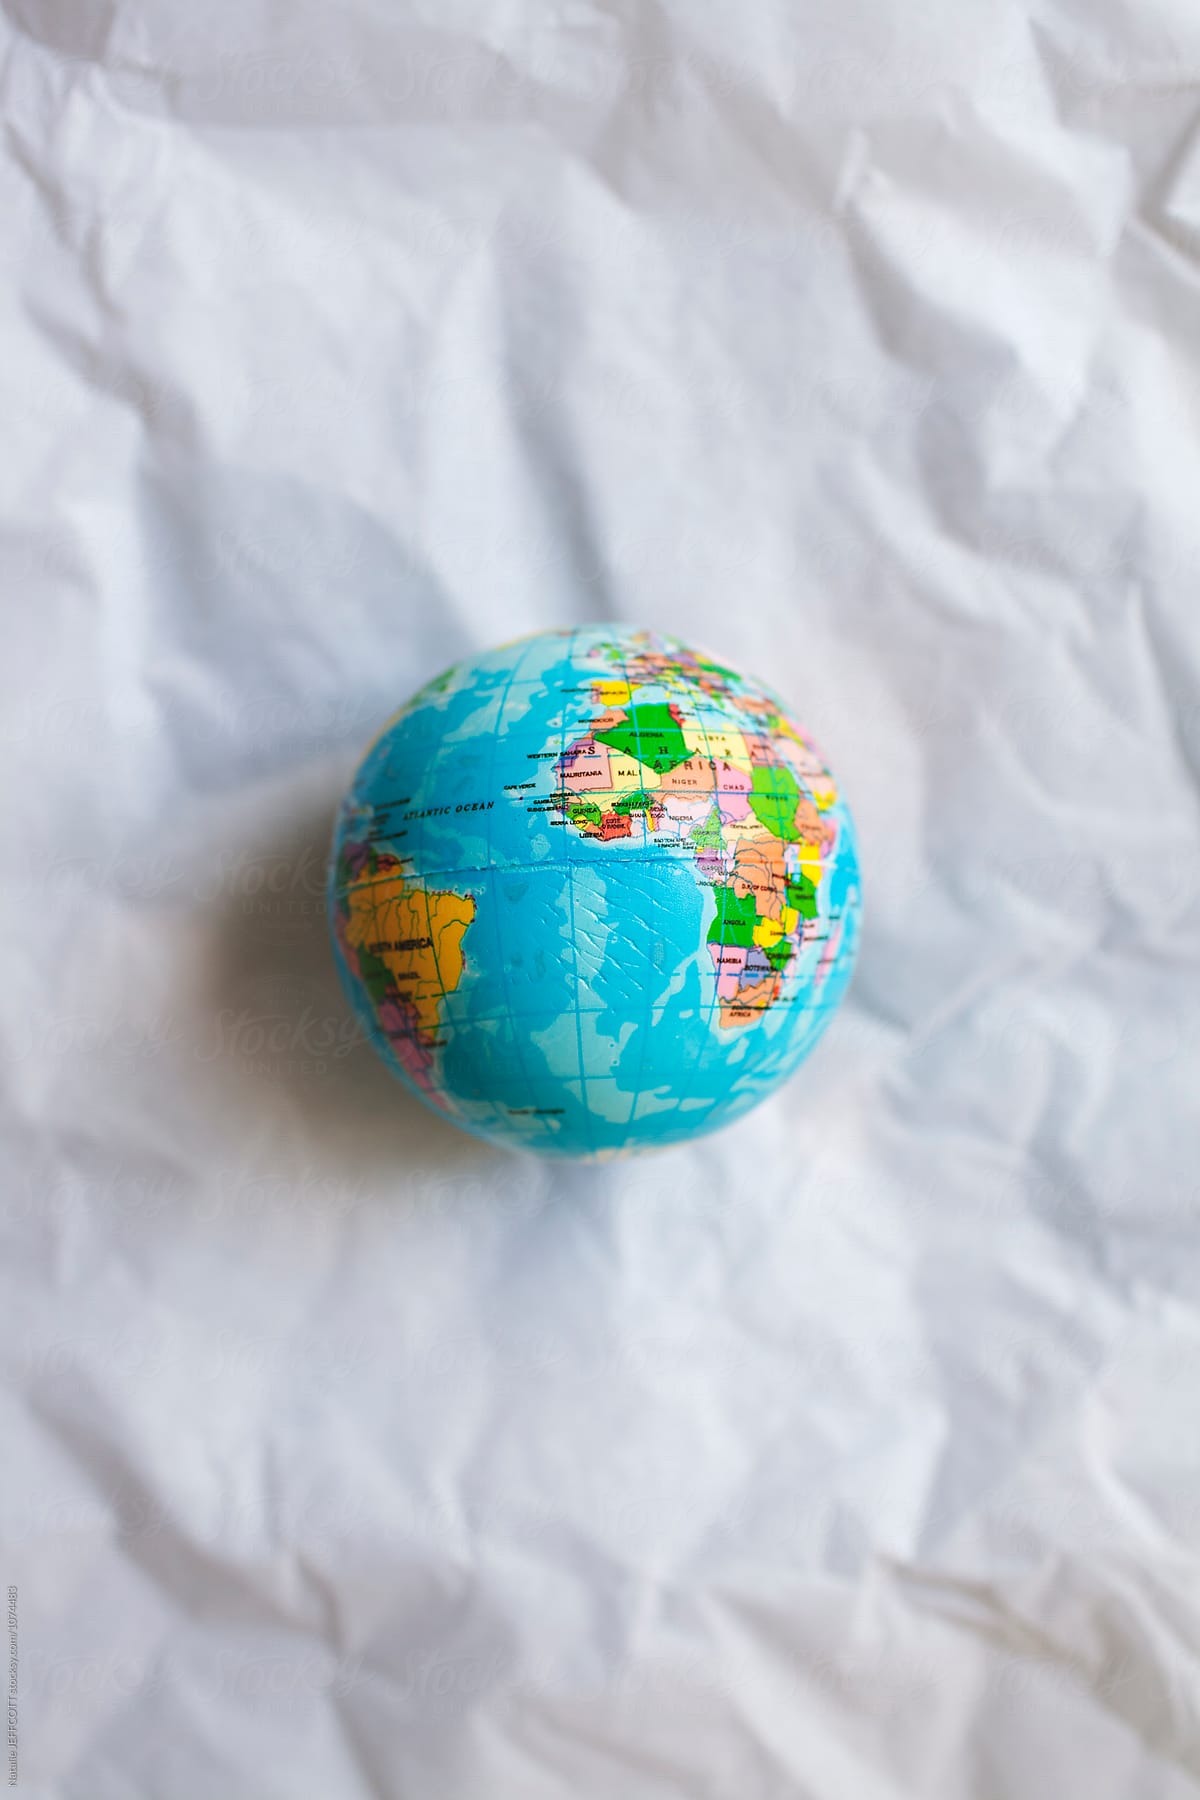 A small world globe on white tissue paper